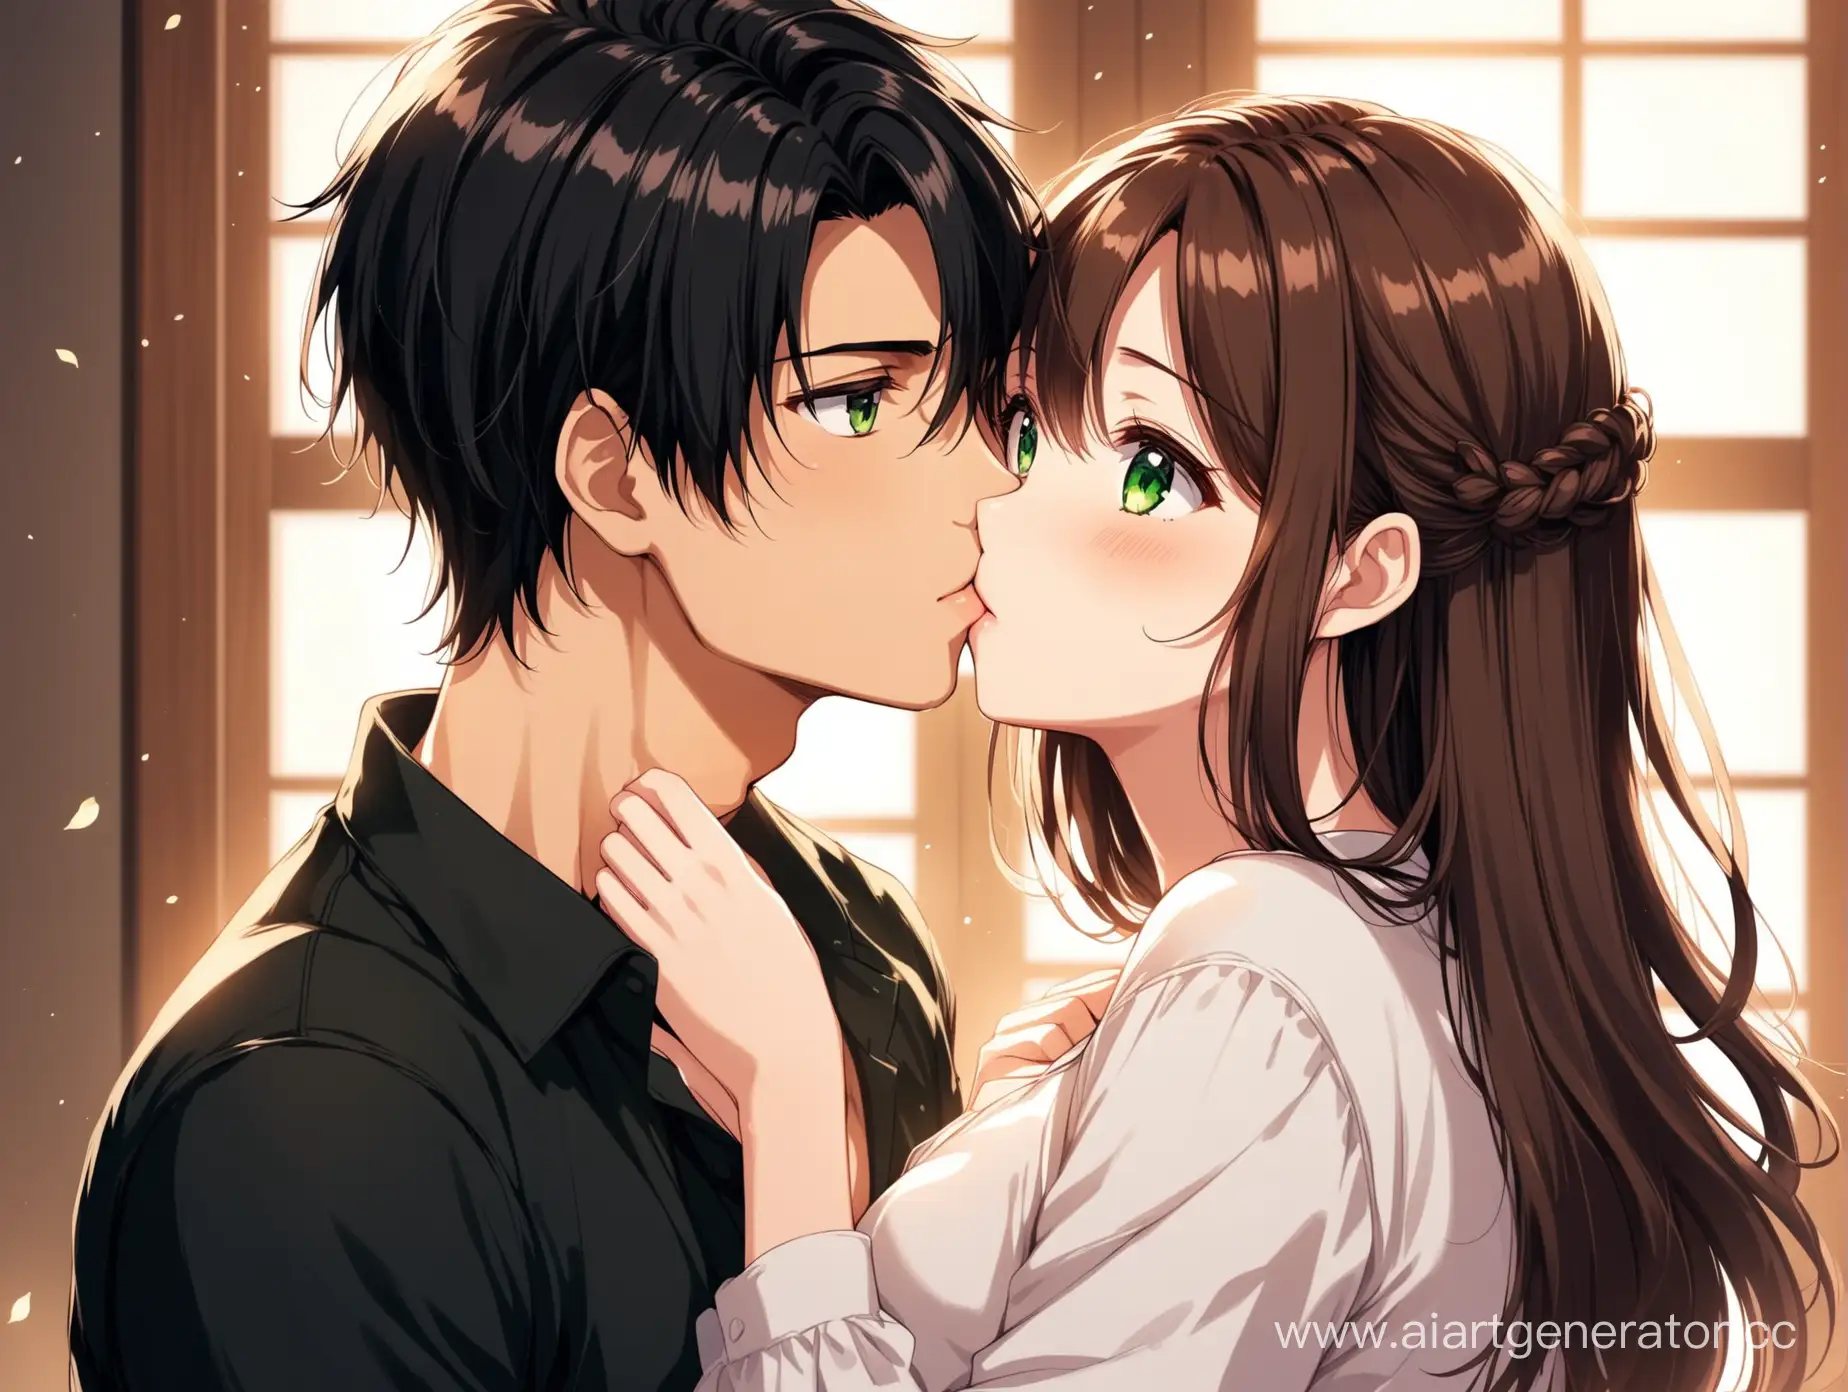 Adorable-Anime-Couple-Kissing-in-Romantic-4K-HD-Scene